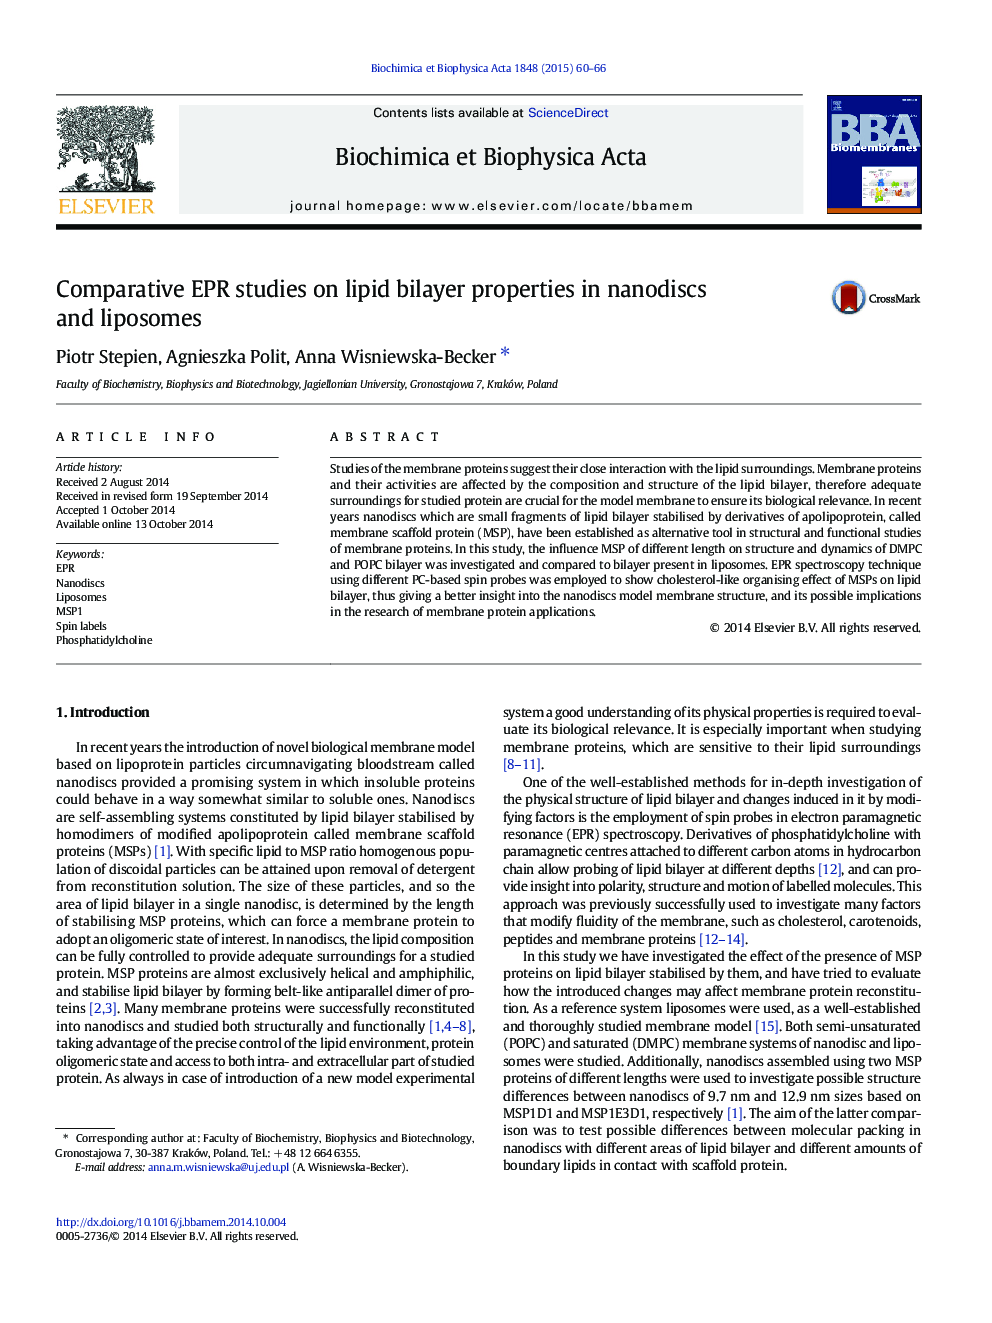 Comparative EPR studies on lipid bilayer properties in nanodiscs and liposomes